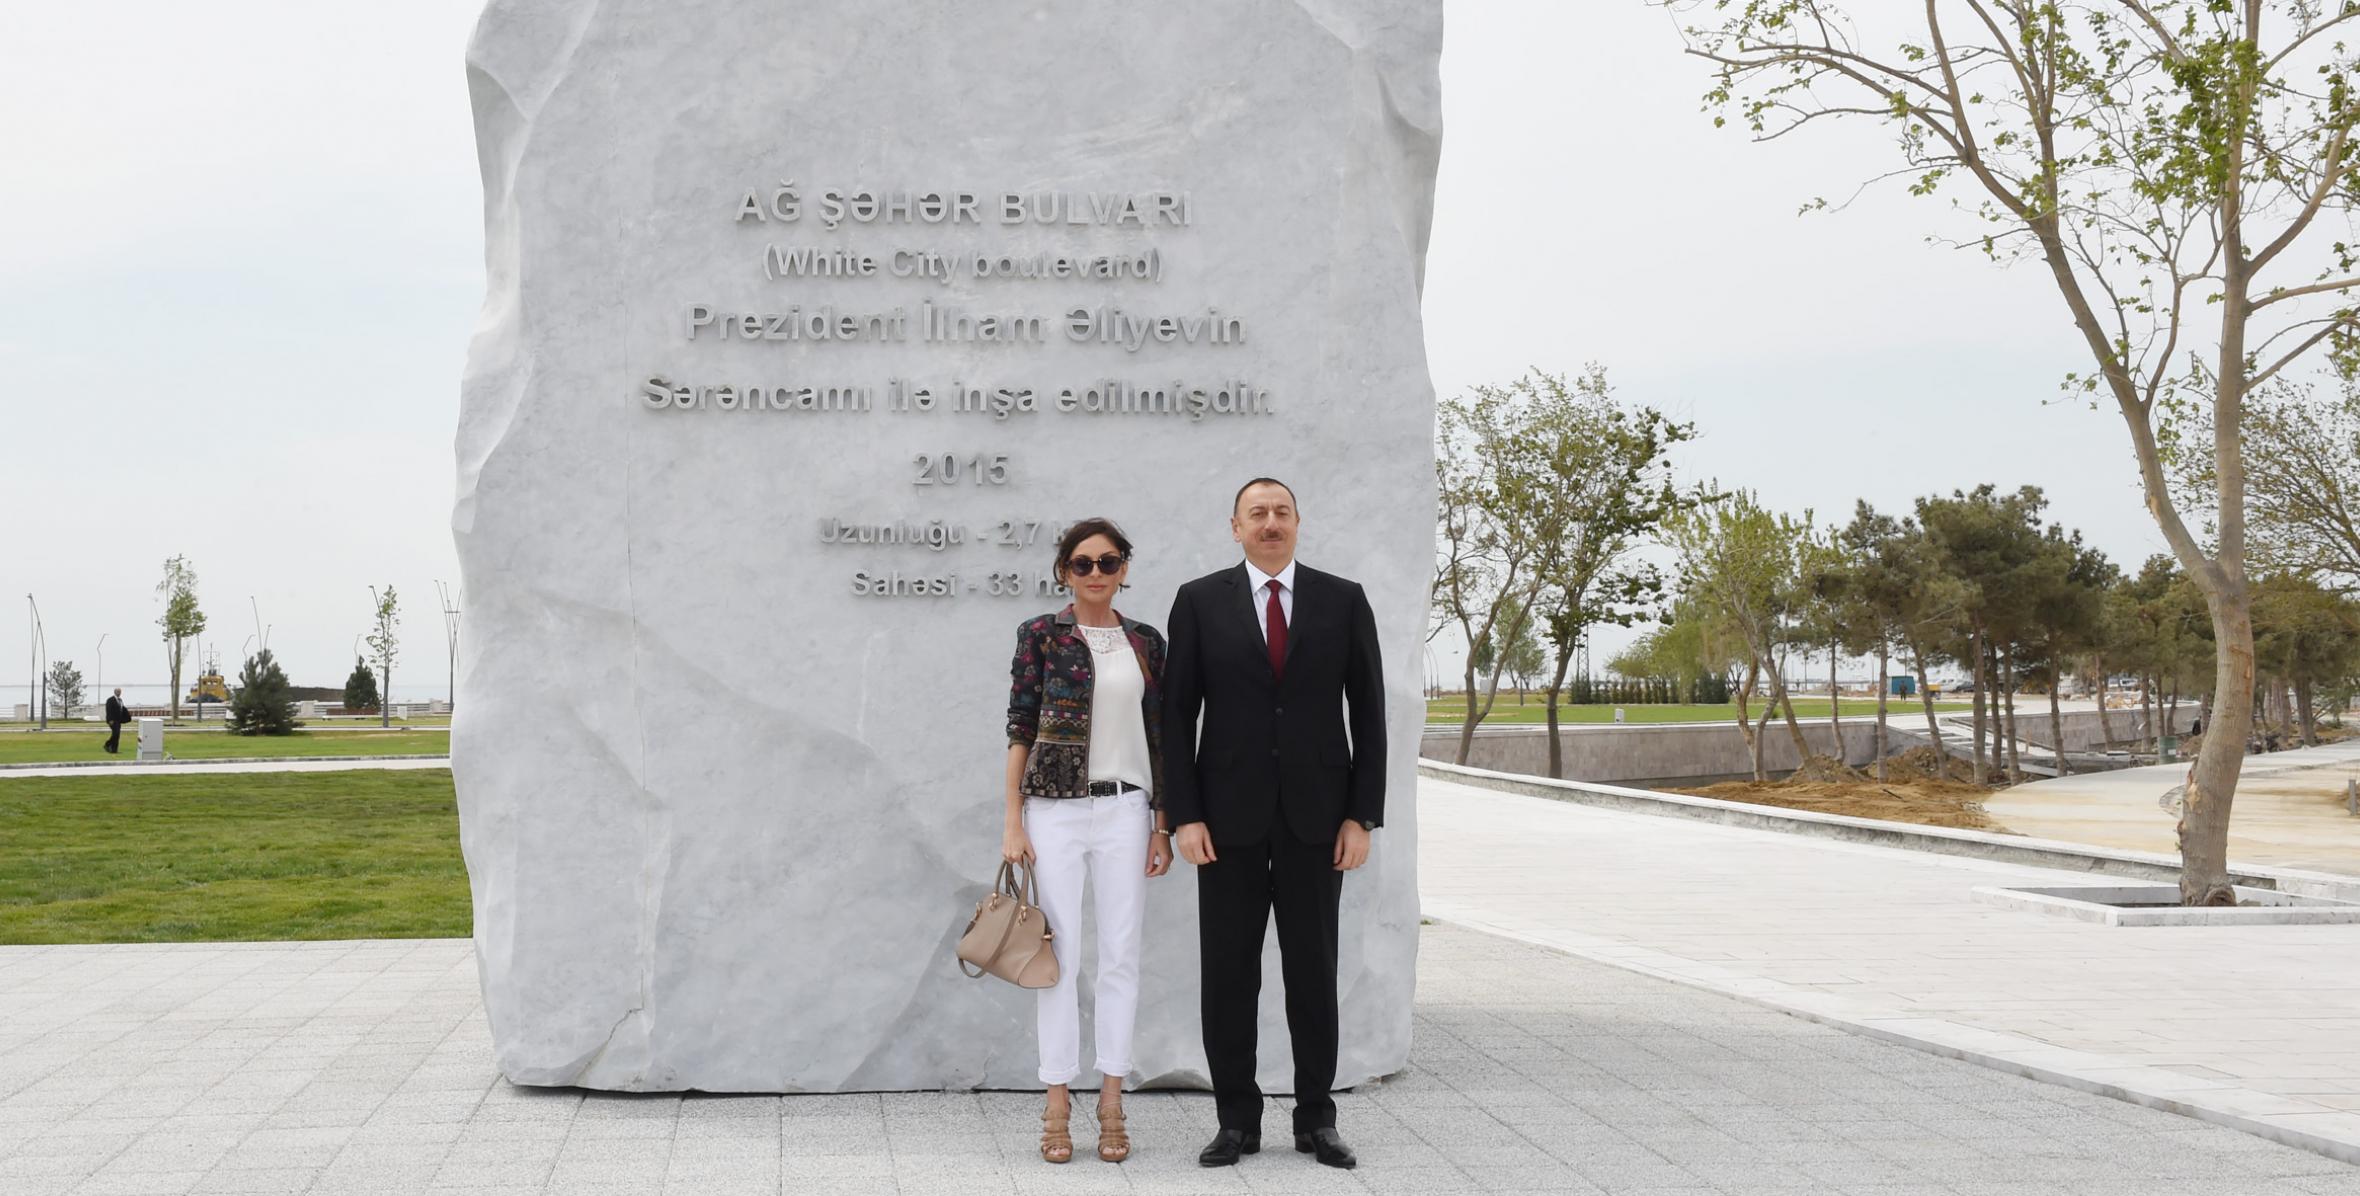 Ilham Aliyev reviewed the Baku White City boulevard